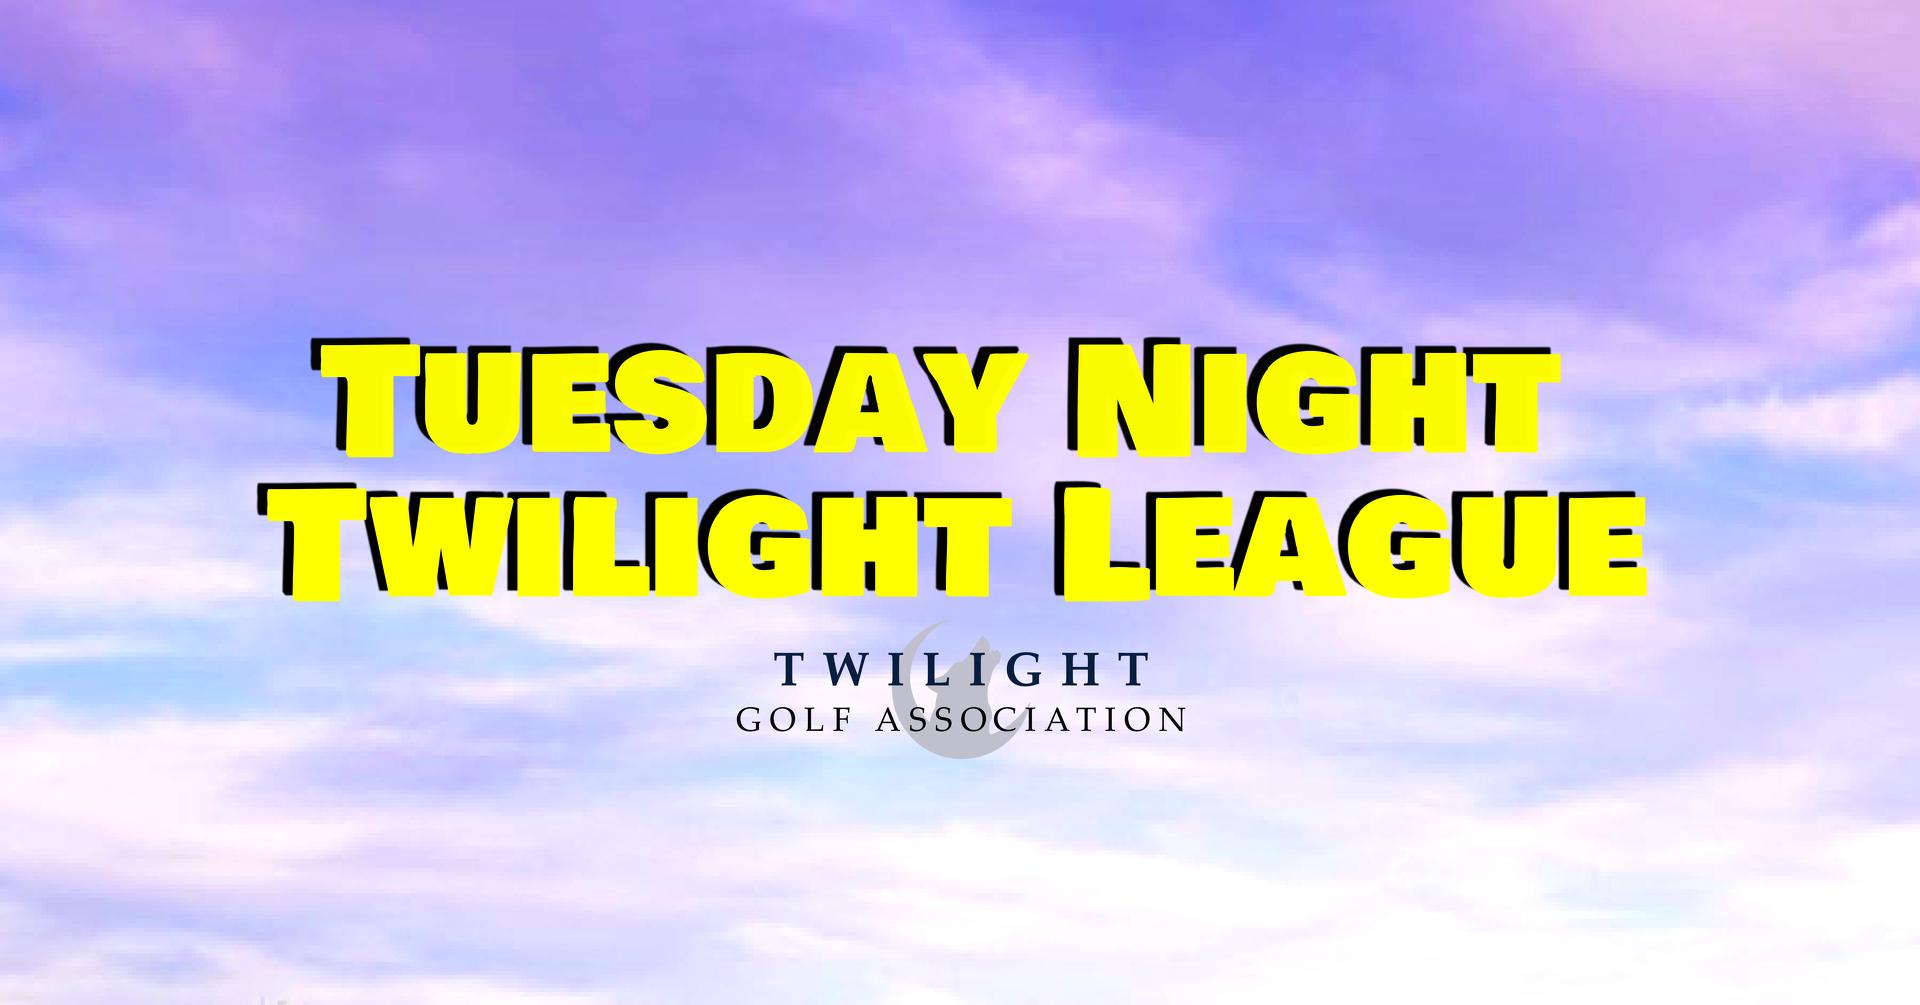 Tuesday Twilight League at Suffolk Golf Course